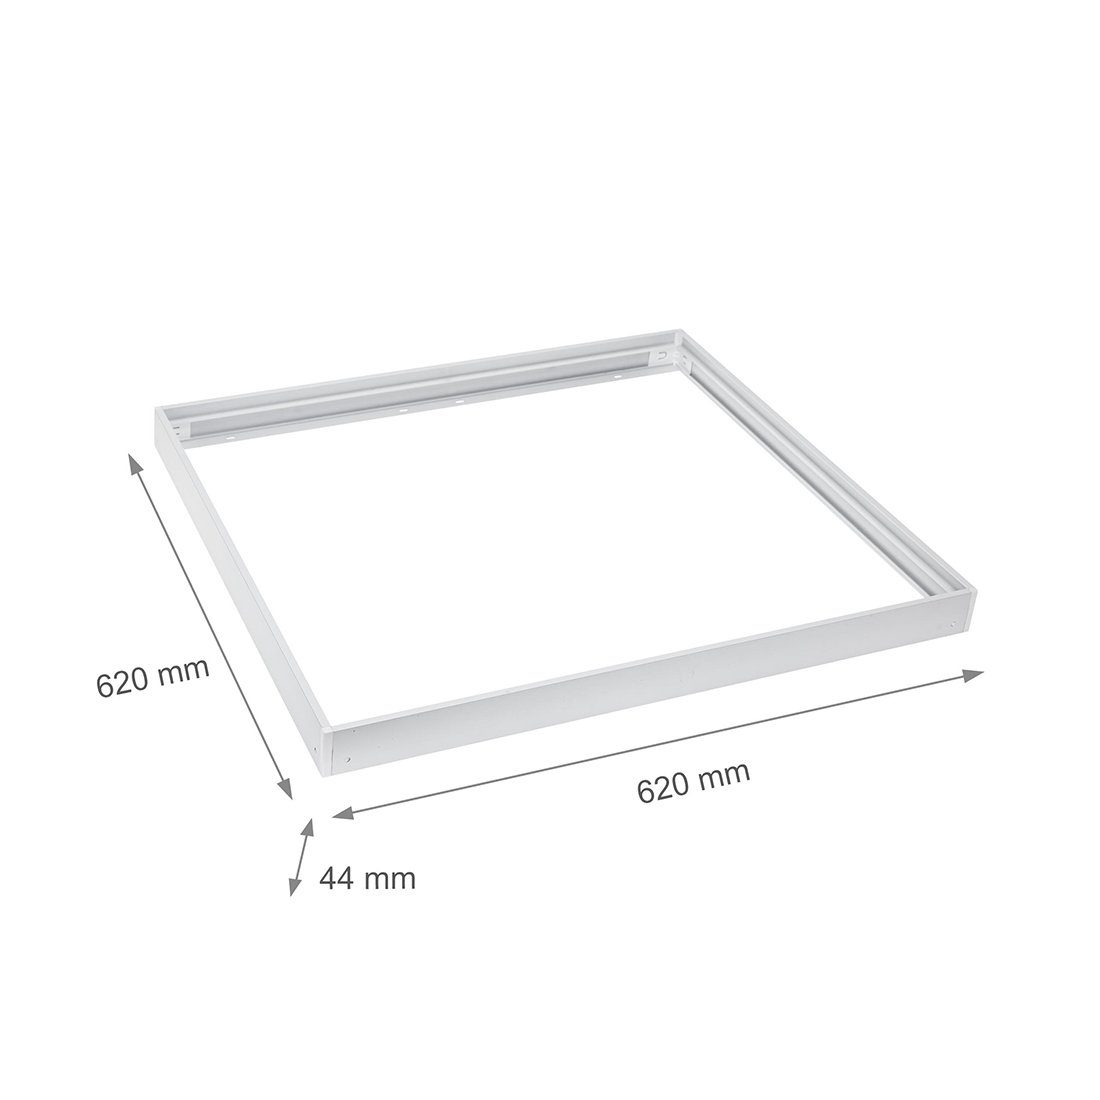 Lecom LED LED Paneele Decke montage für 62x62 Aufputz Deckenanbau, für Aufbaurahmen 62x62 Aufputz Rahmen Rahmen Panel LED